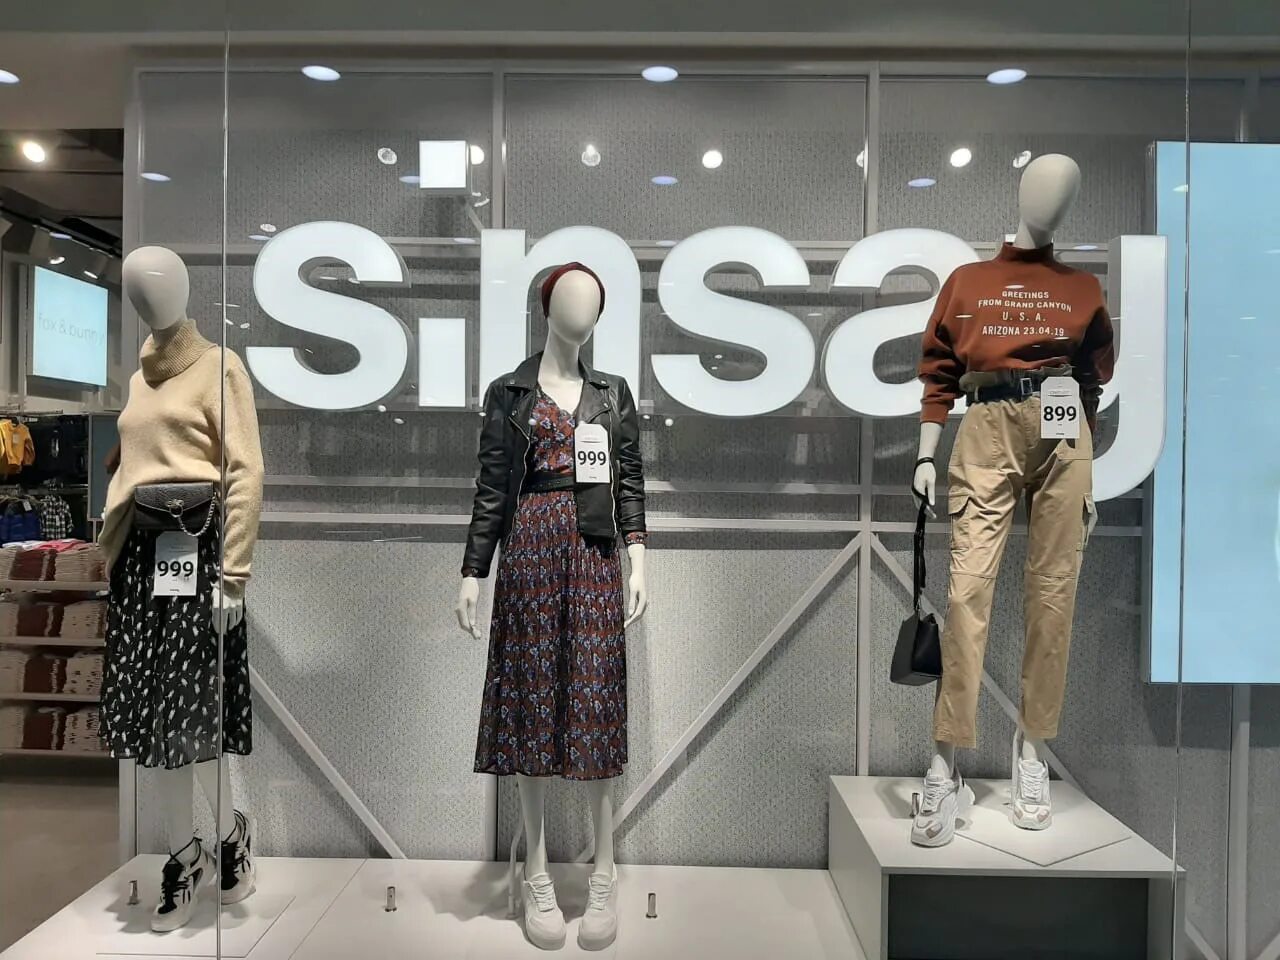 Сенсей магазин одежды. Бренд одежды Sinsay. Sinsay витрины. Sensei одежда интернет магазин. Одежда минск сайты